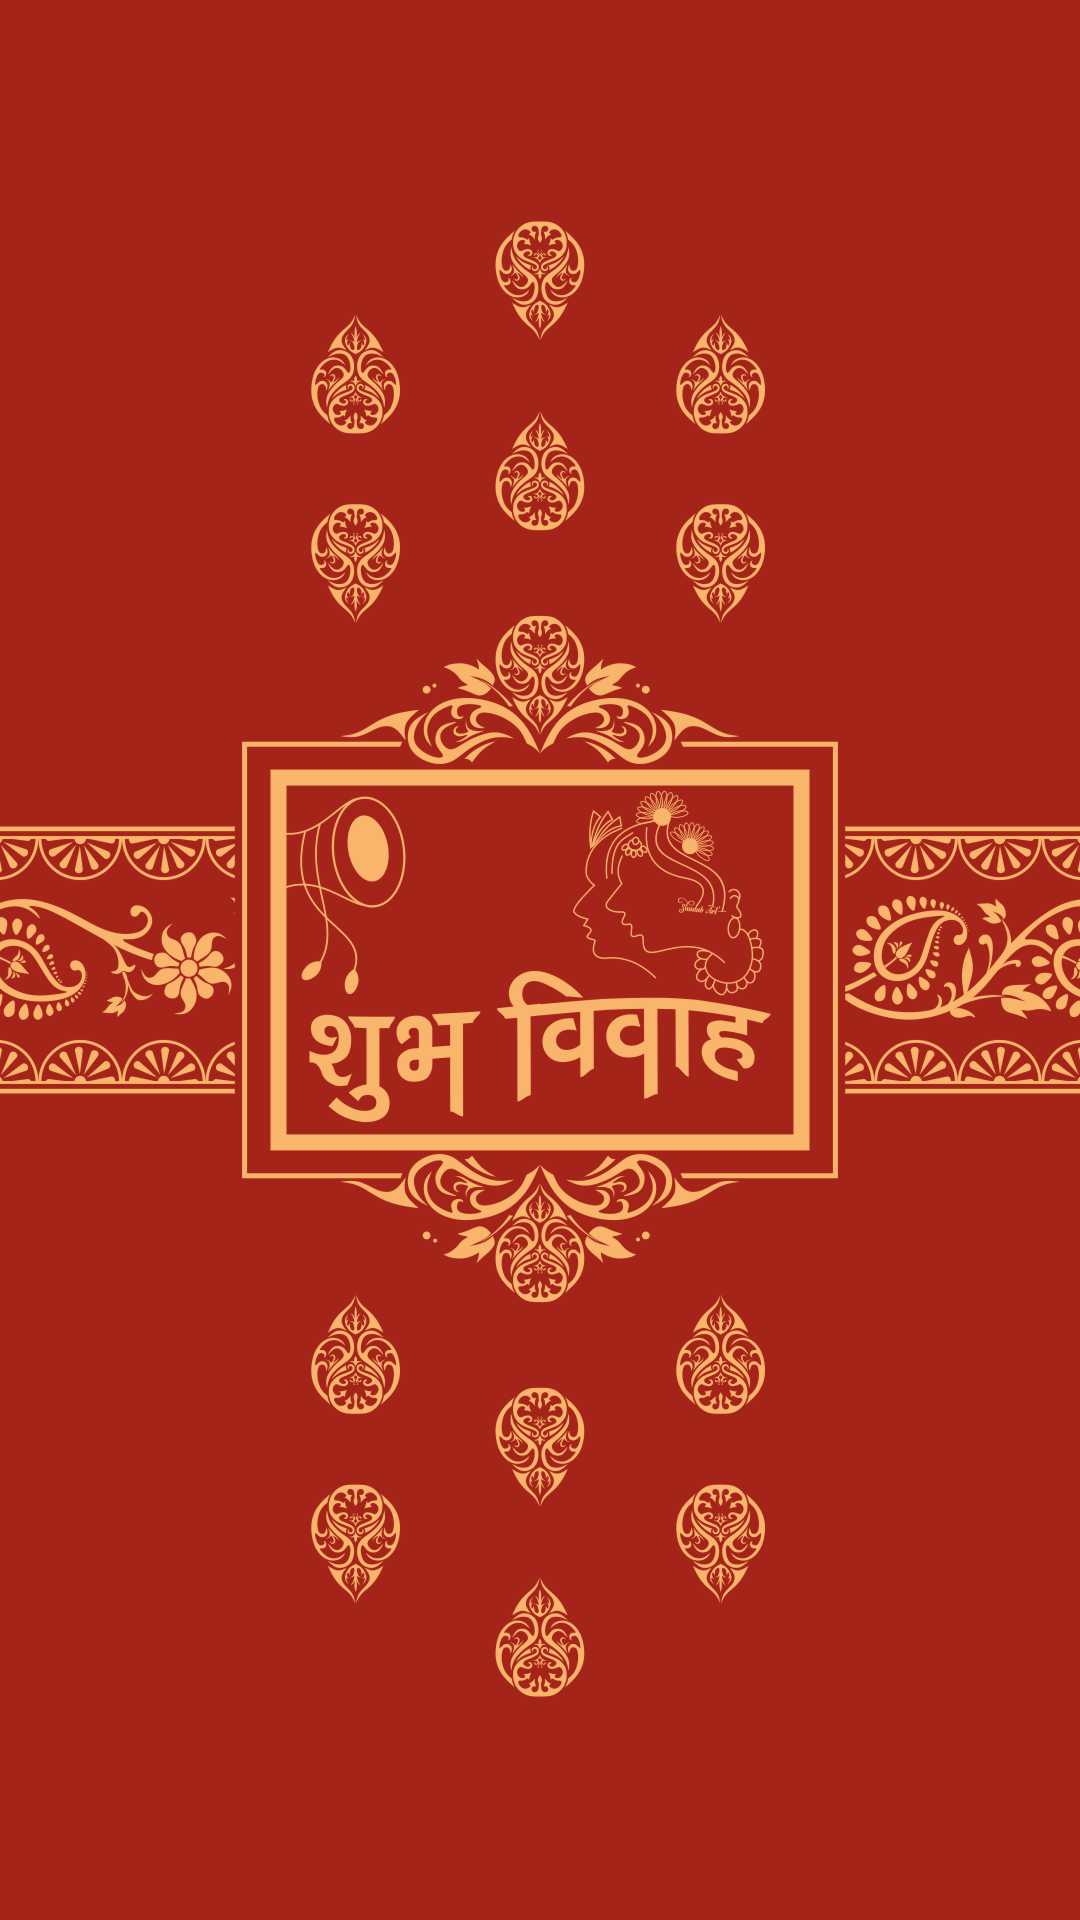 hindu wedding card design in portrait